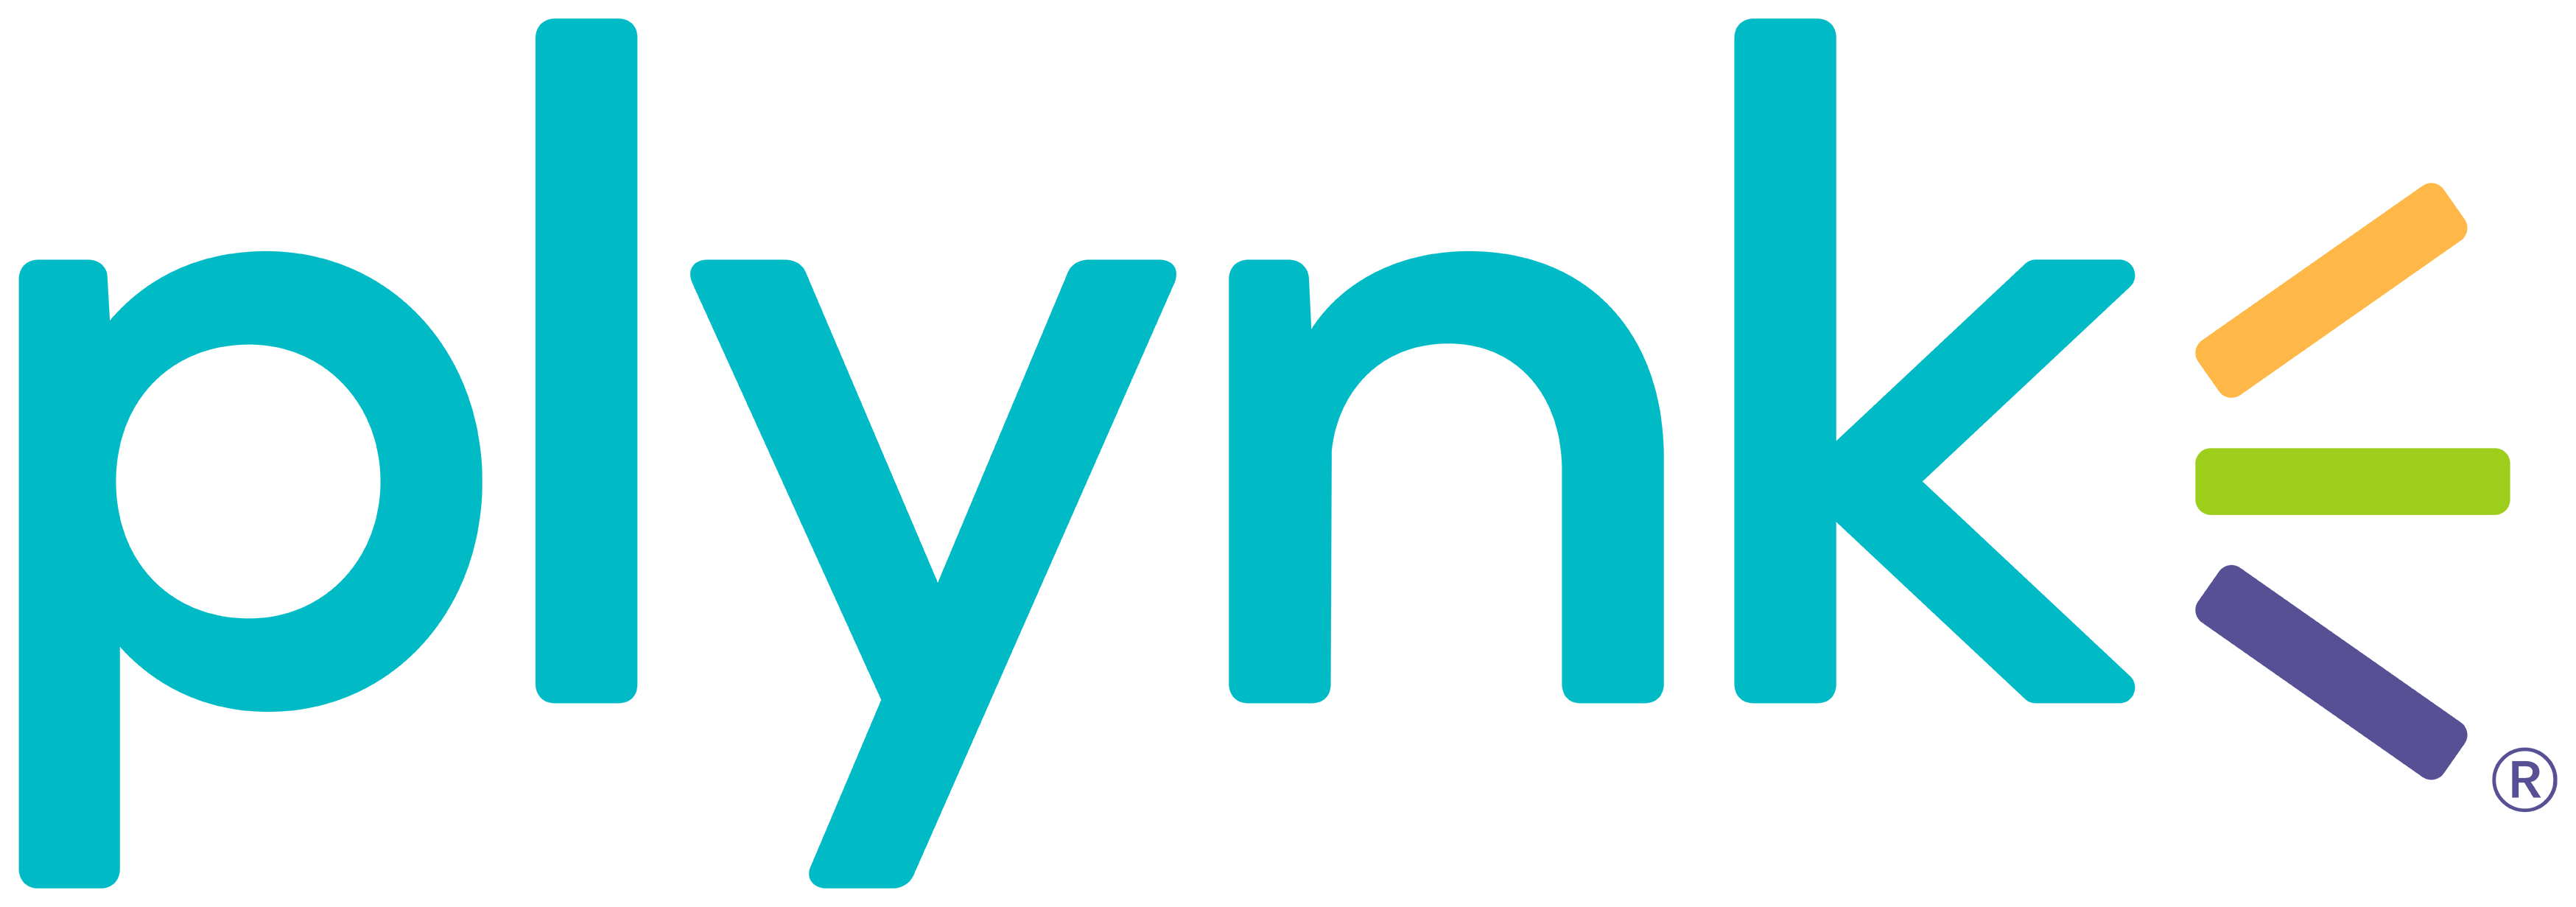 logo: Plynk investing app for beginning investors